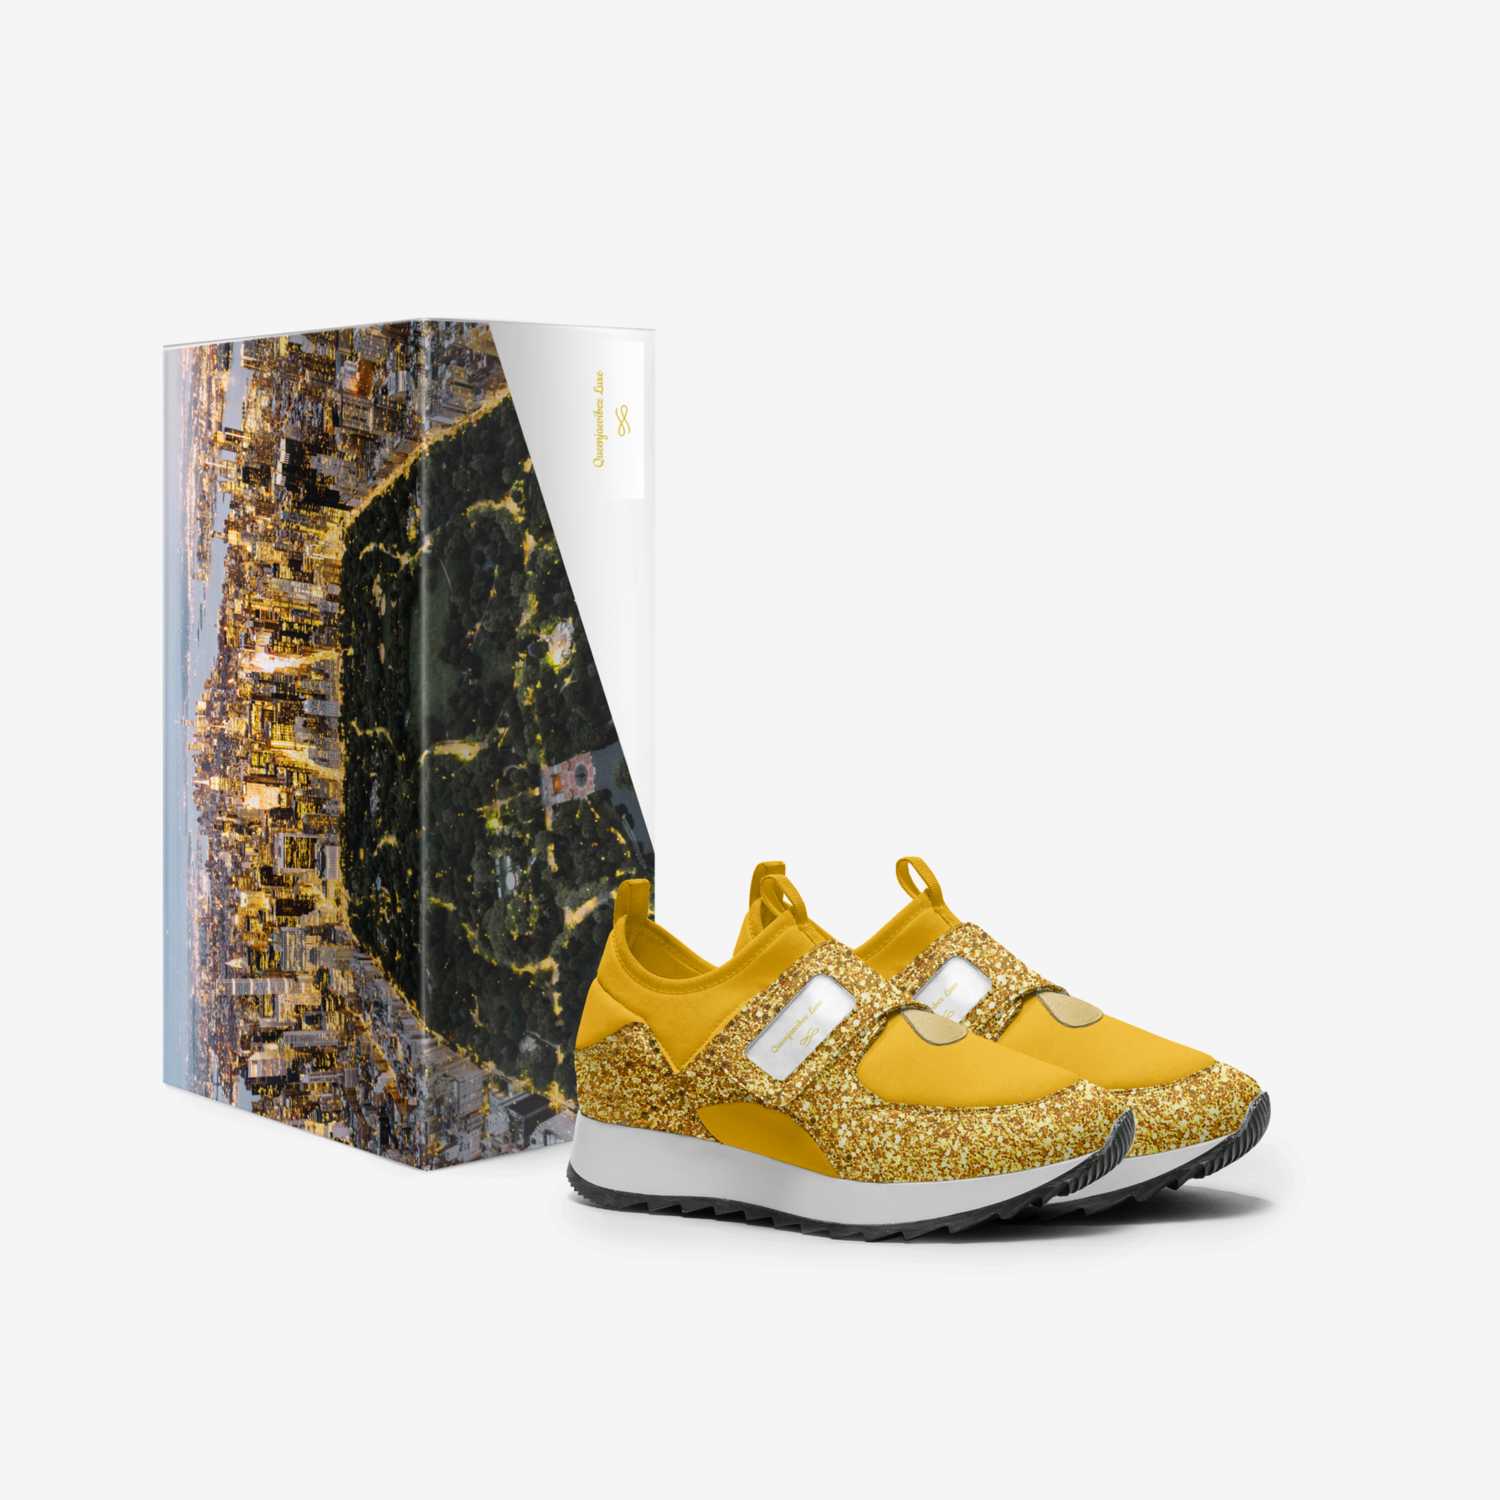 Futuristic  custom made in Italy shoes by Jocelyn Joe | Box view